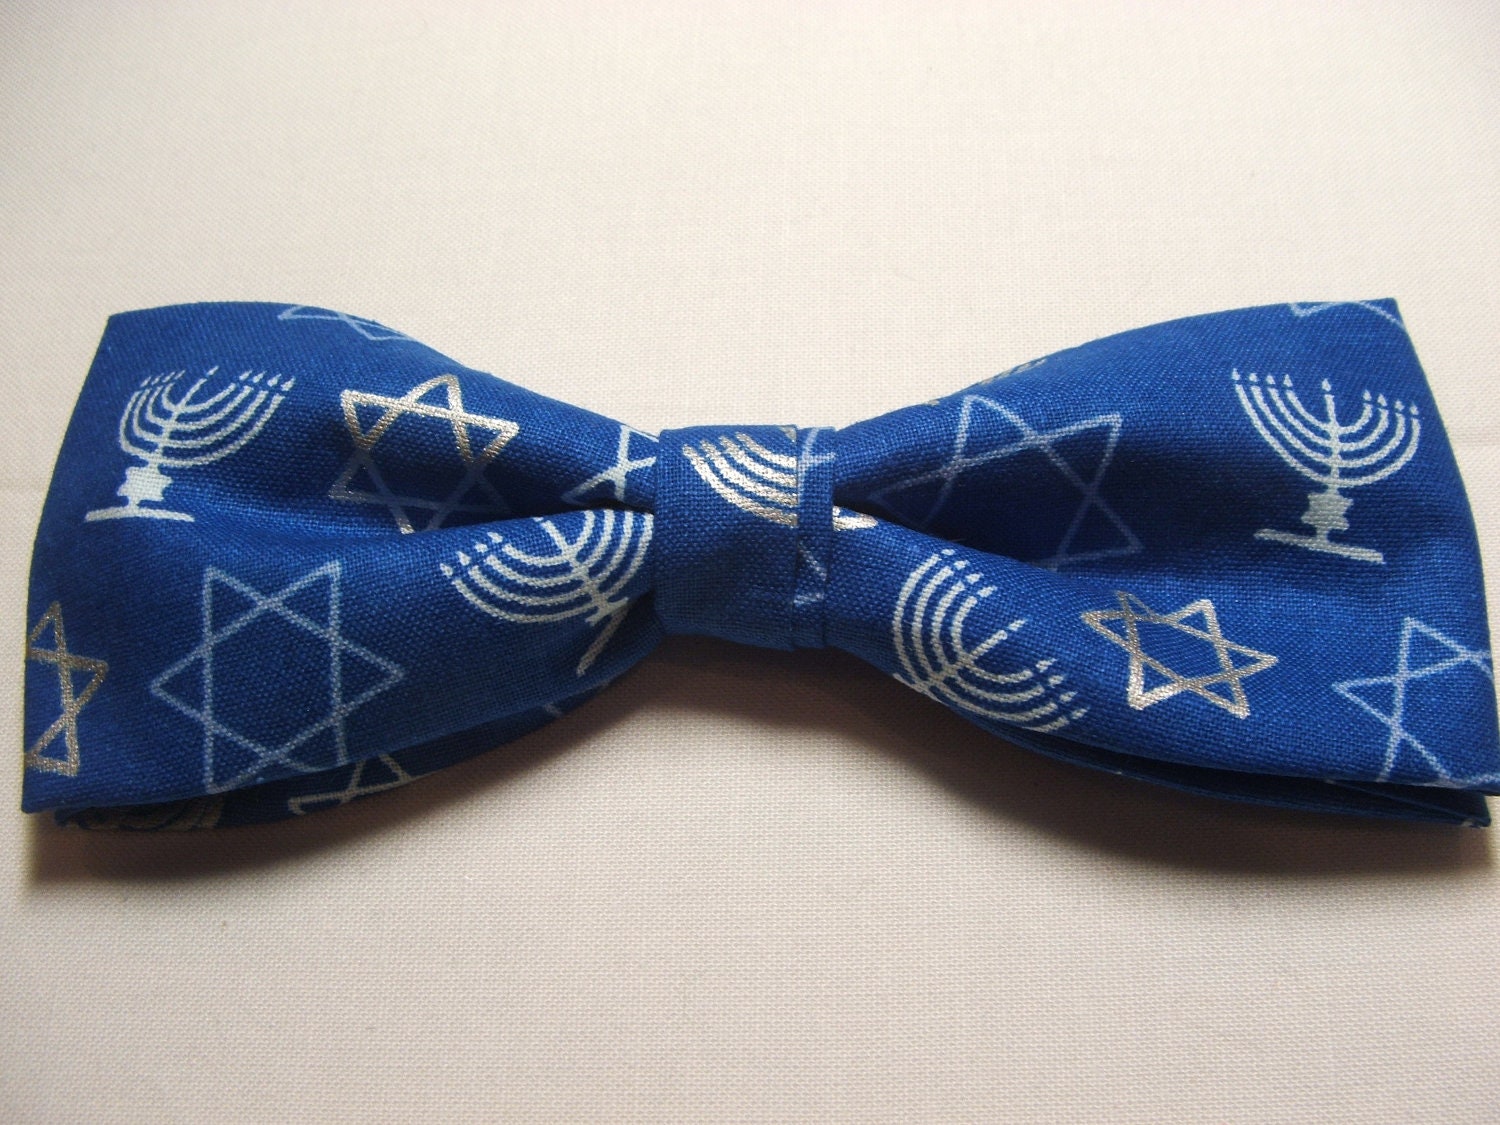 New Chanukah Menorah Hanukkah Blue Silver Jewish Bow Tie Men Adjustable Pretied Handmade